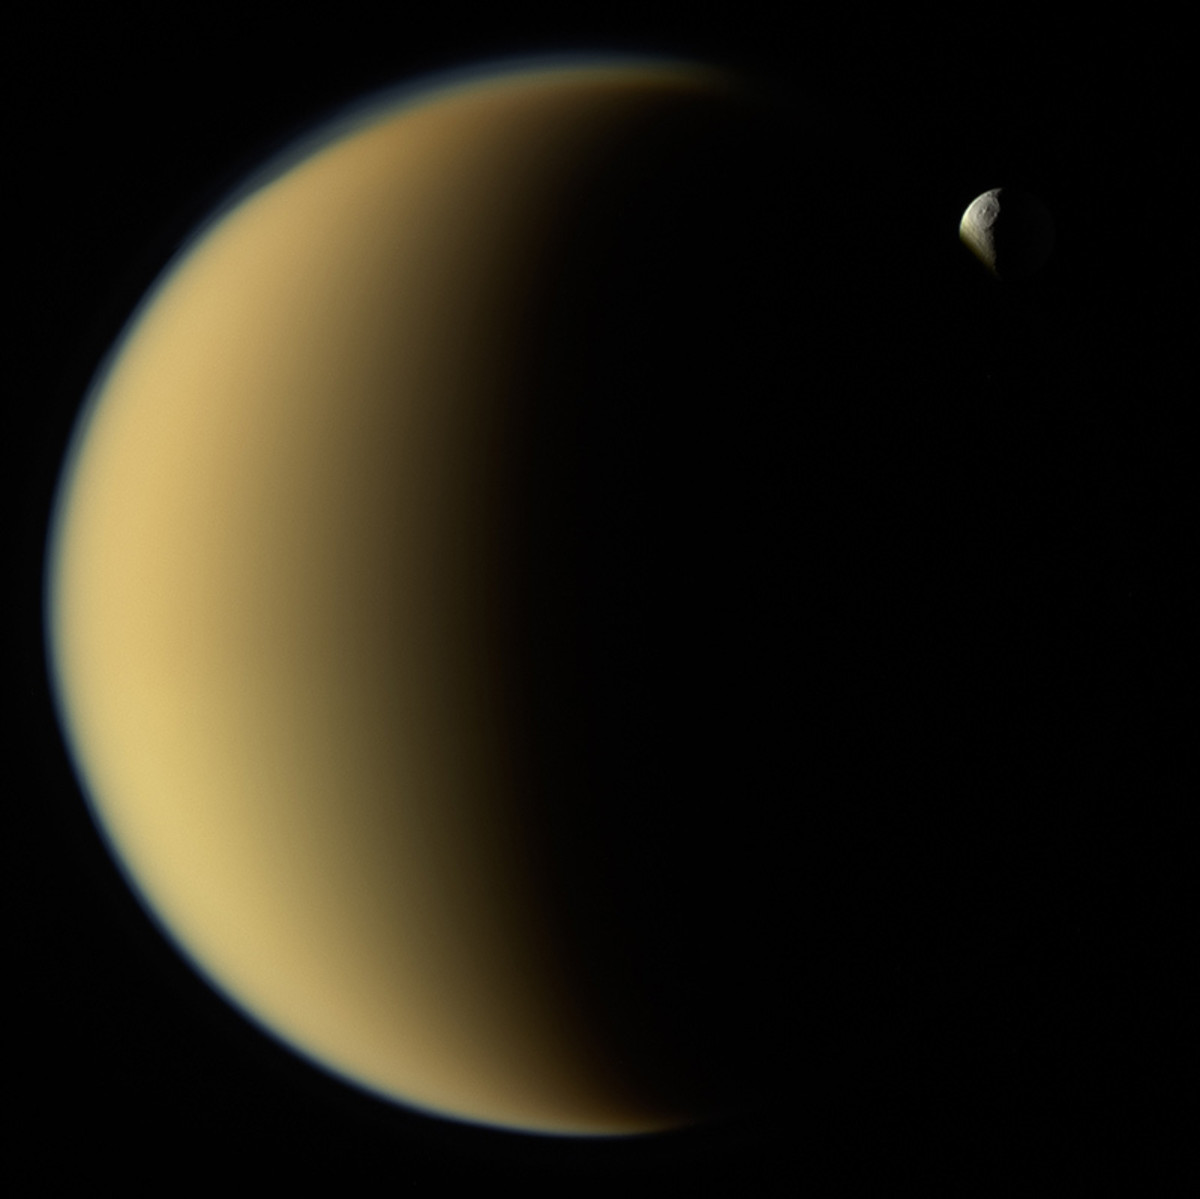 Image of the moon Titan